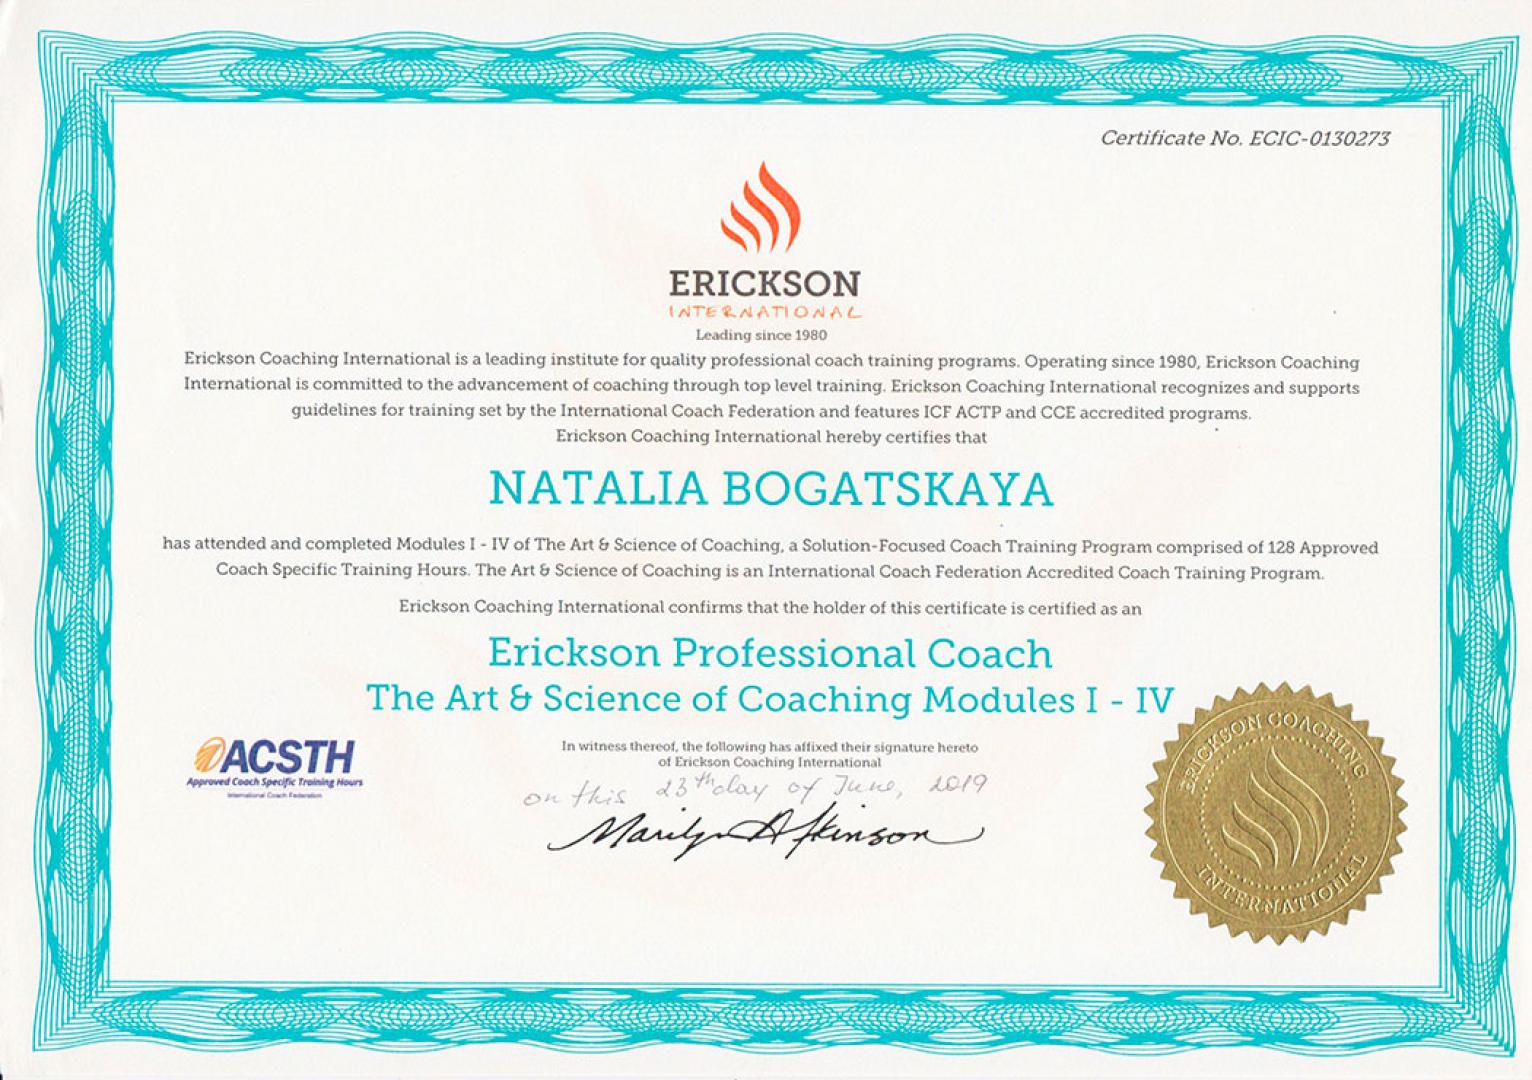 Наталья Богацкая: Сертификат “Erickson Professional Coach The Art & Science of Coaching Modules I-IV”